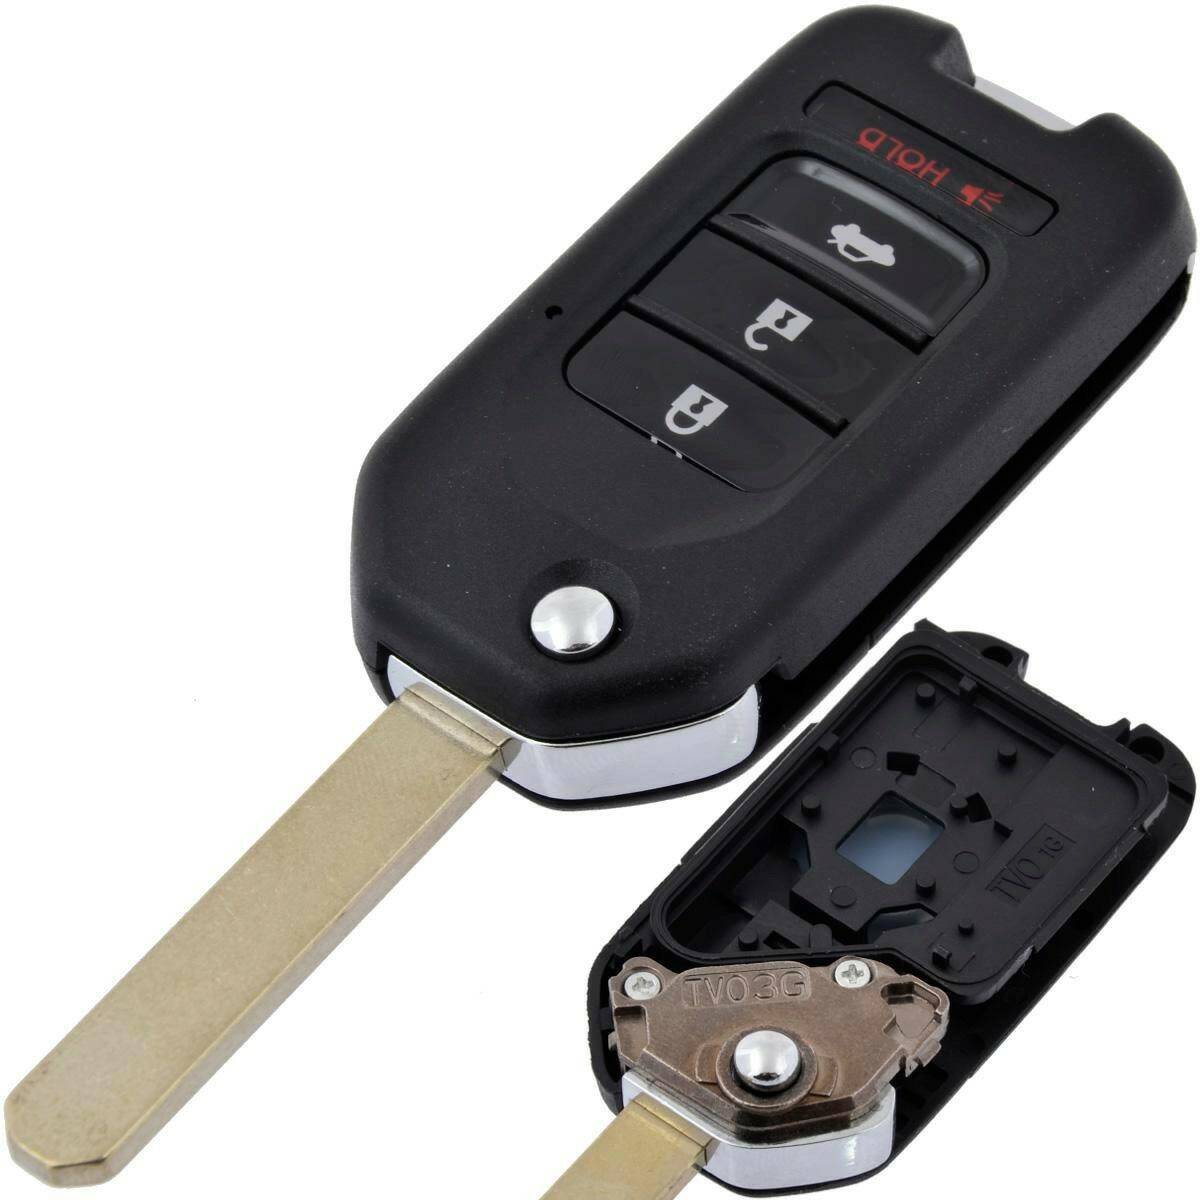 Mini Schlüssel Gehäuse mit 3 Tasten - Mr Key